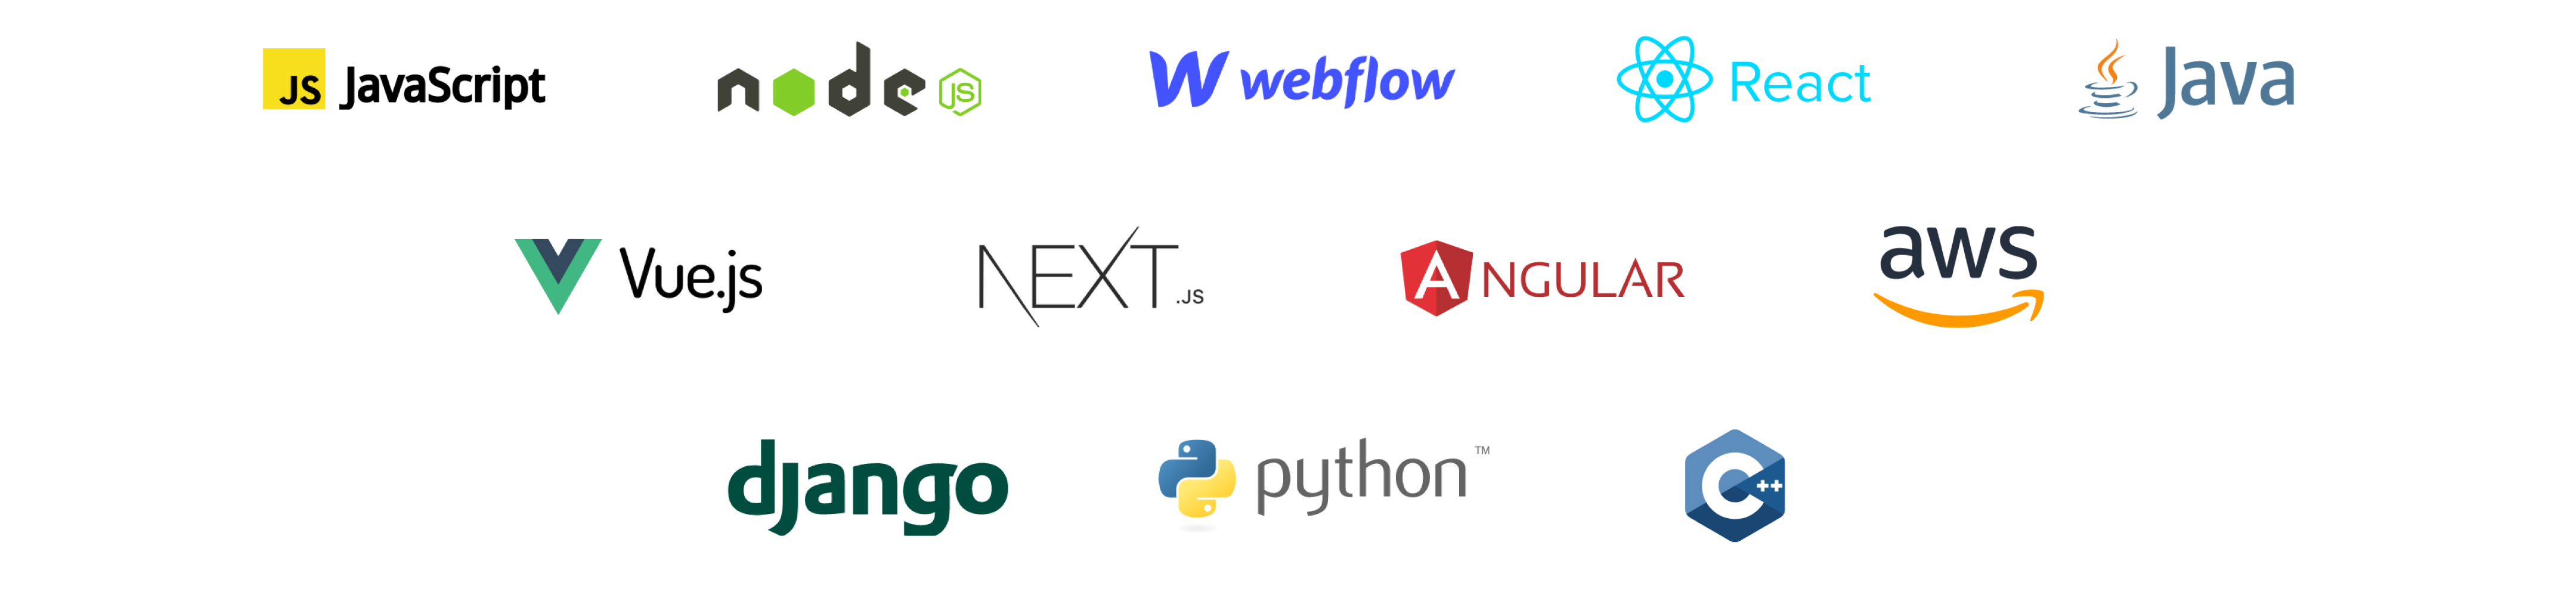 Technologies we build with - Javascript, NodeJS, Webflow, React, Java, Vue.JS, Next.JS, Angular, AWS, Django, Python, Flask